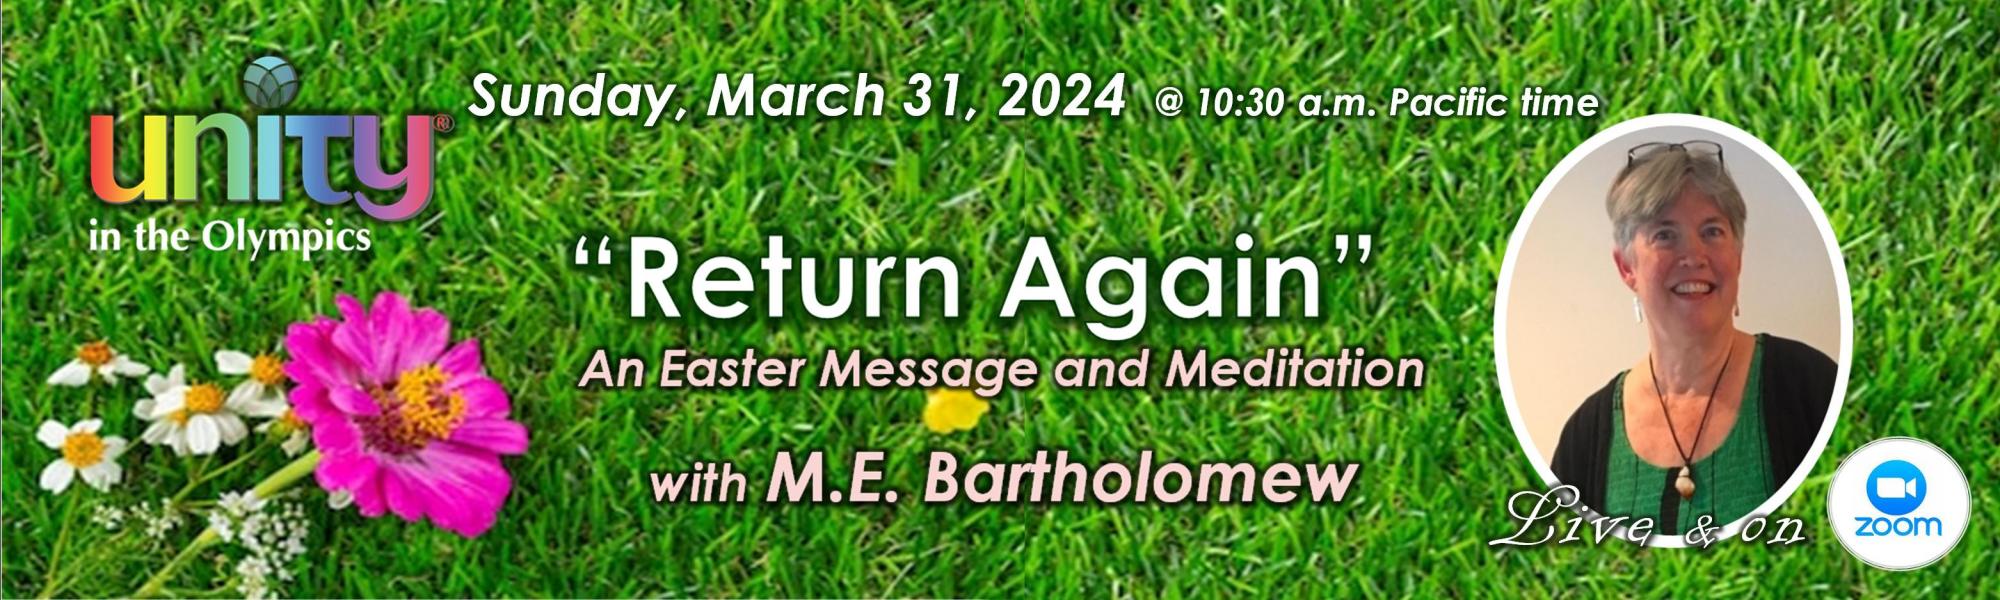 Sunday, March 31, 2024 Celebration Service "Return Again"